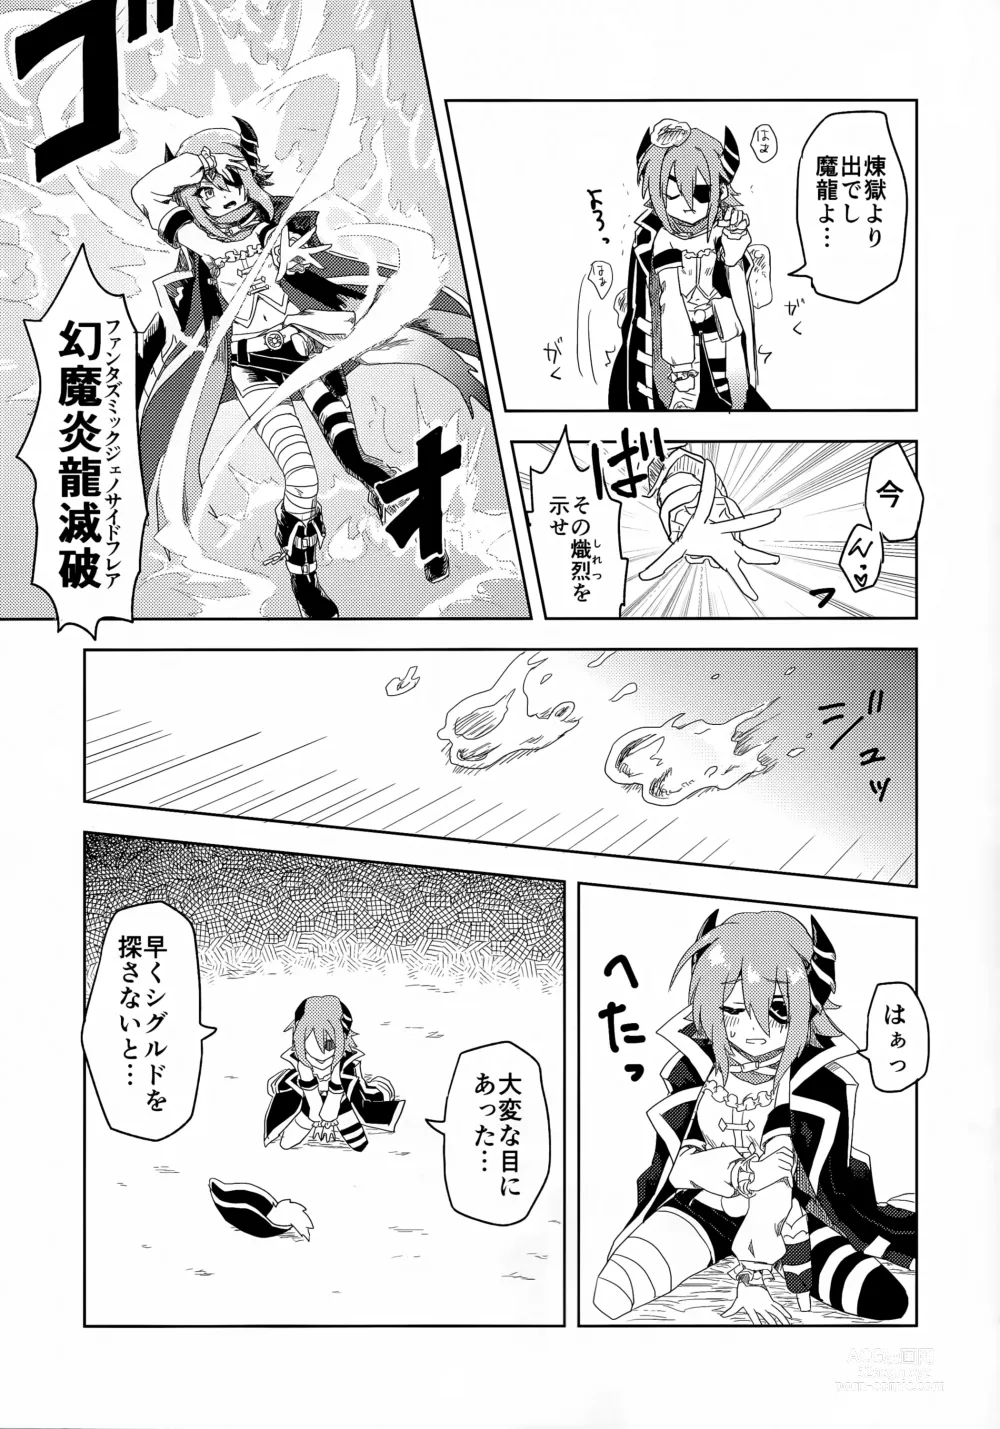 Page 7 of doujinshi Anna-chan to Ero Trap Dungeon